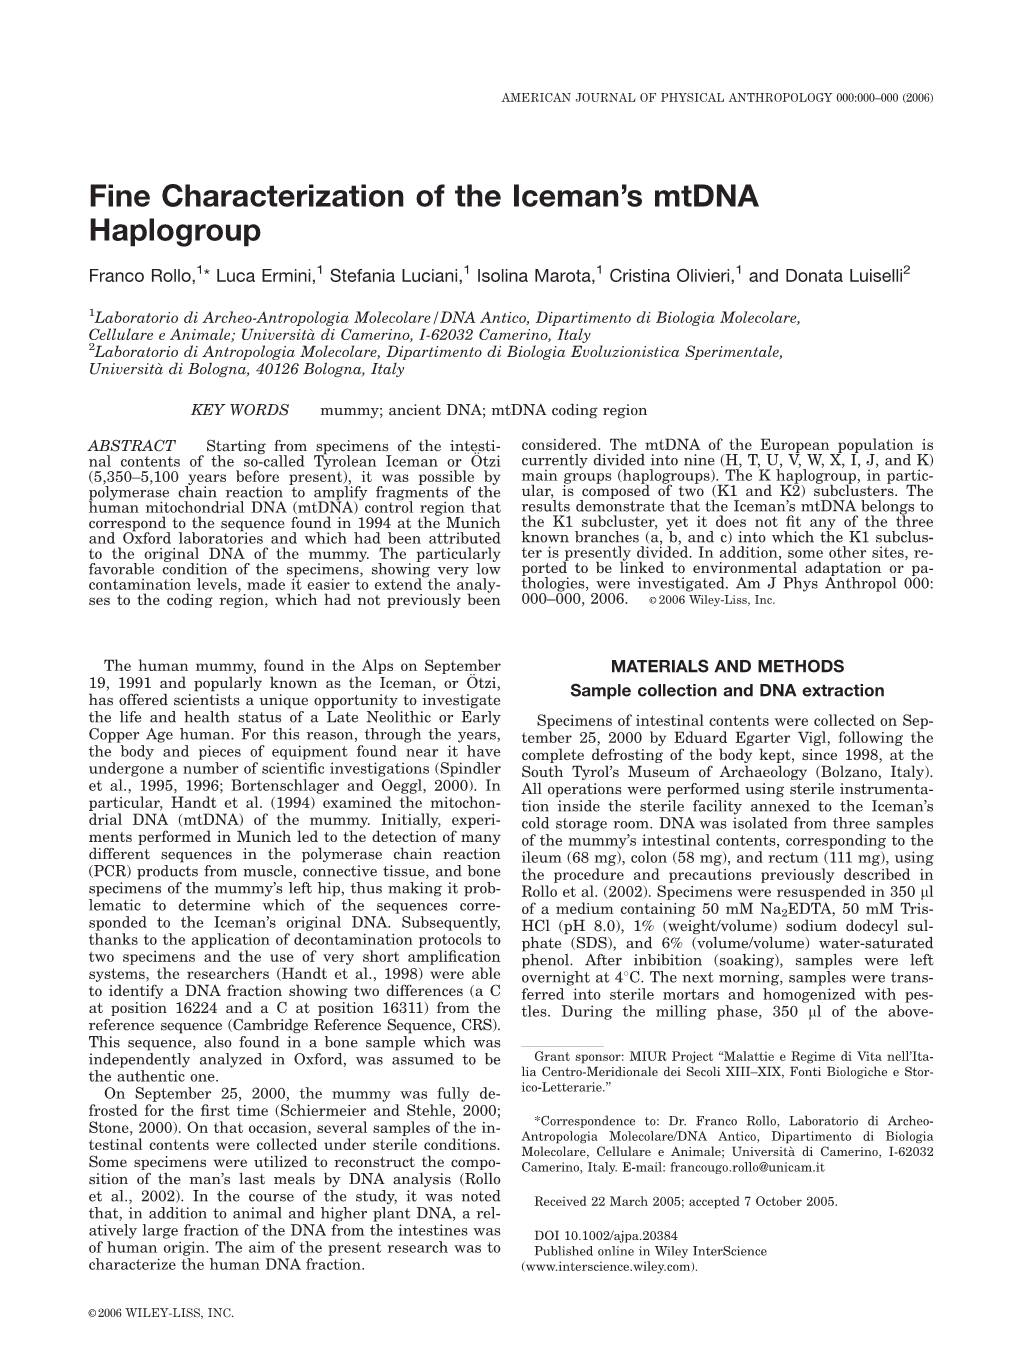 Fine Characterization of the Iceman's Mtdna Haplogroup